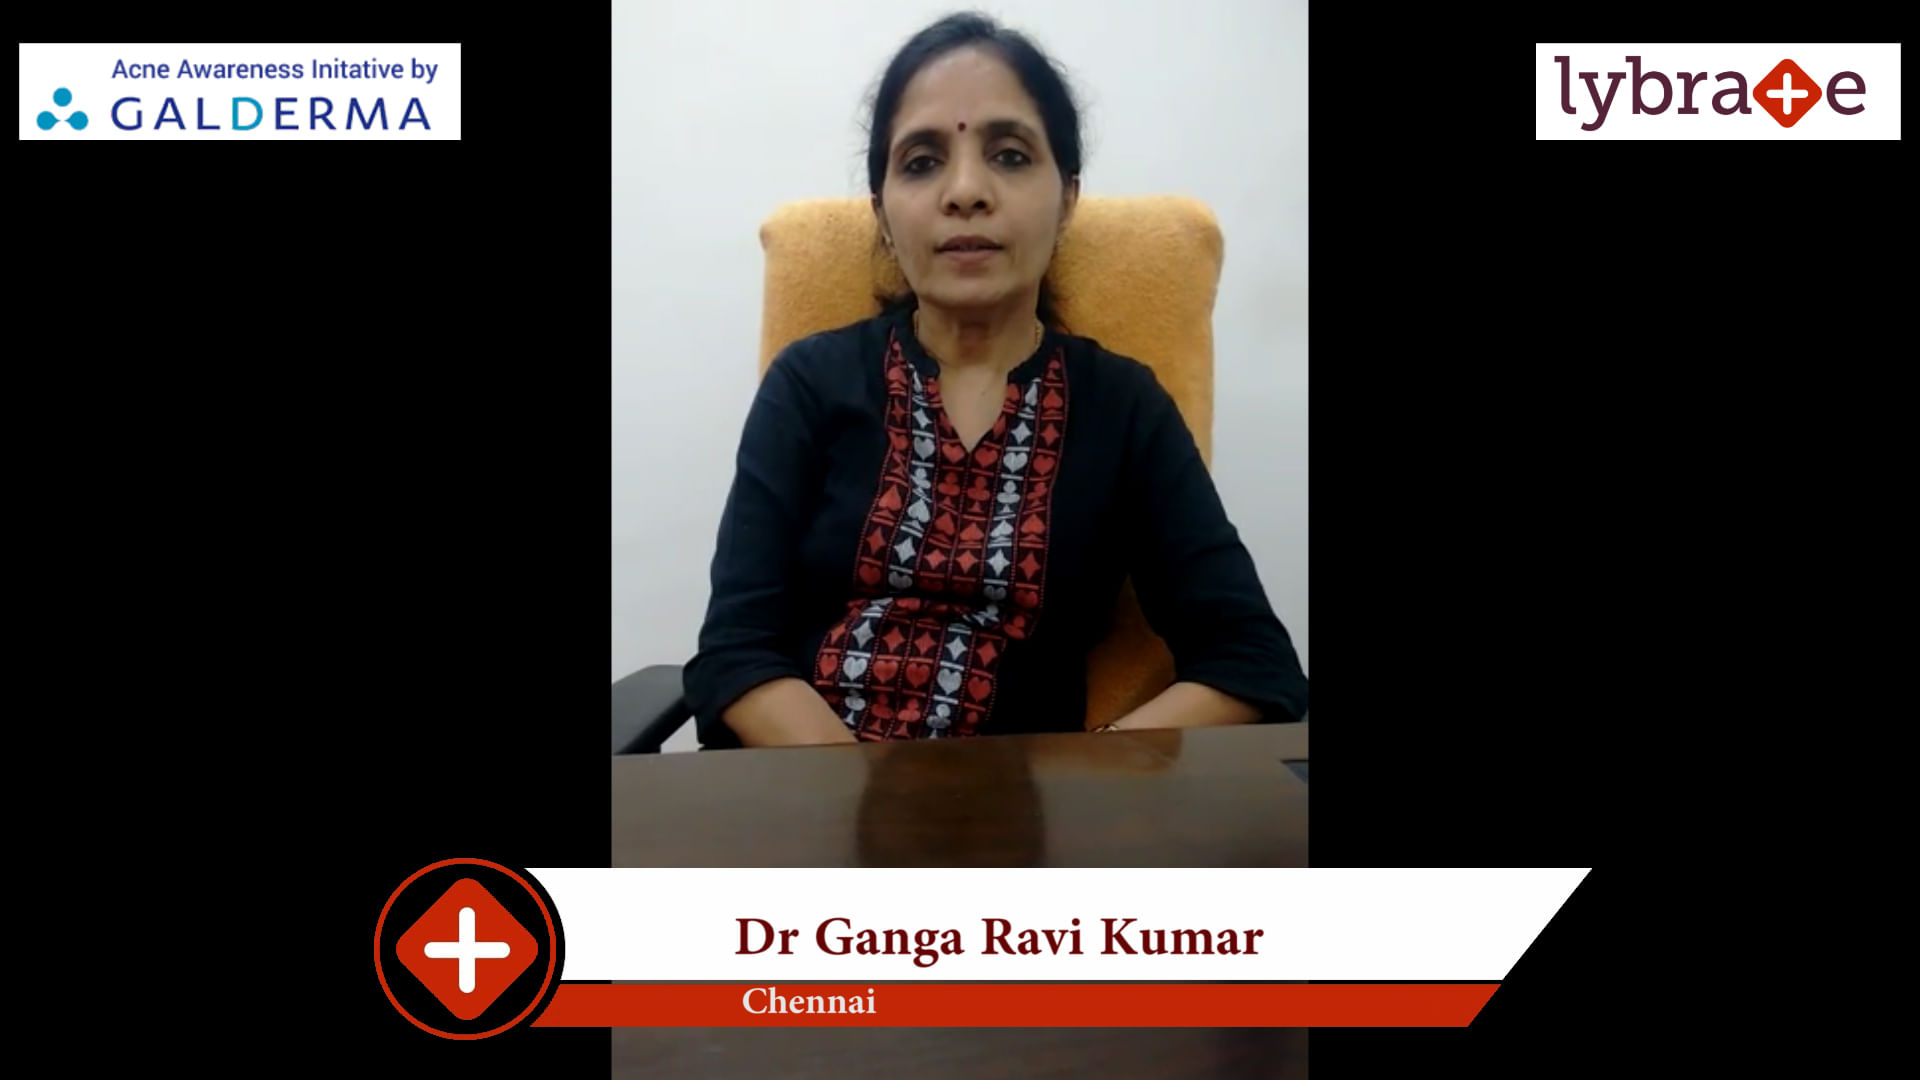 Lybrate | Dr. Ganga Ravi Kumar speaks on IMPORTANCE OF TREATING ACNE EARLY